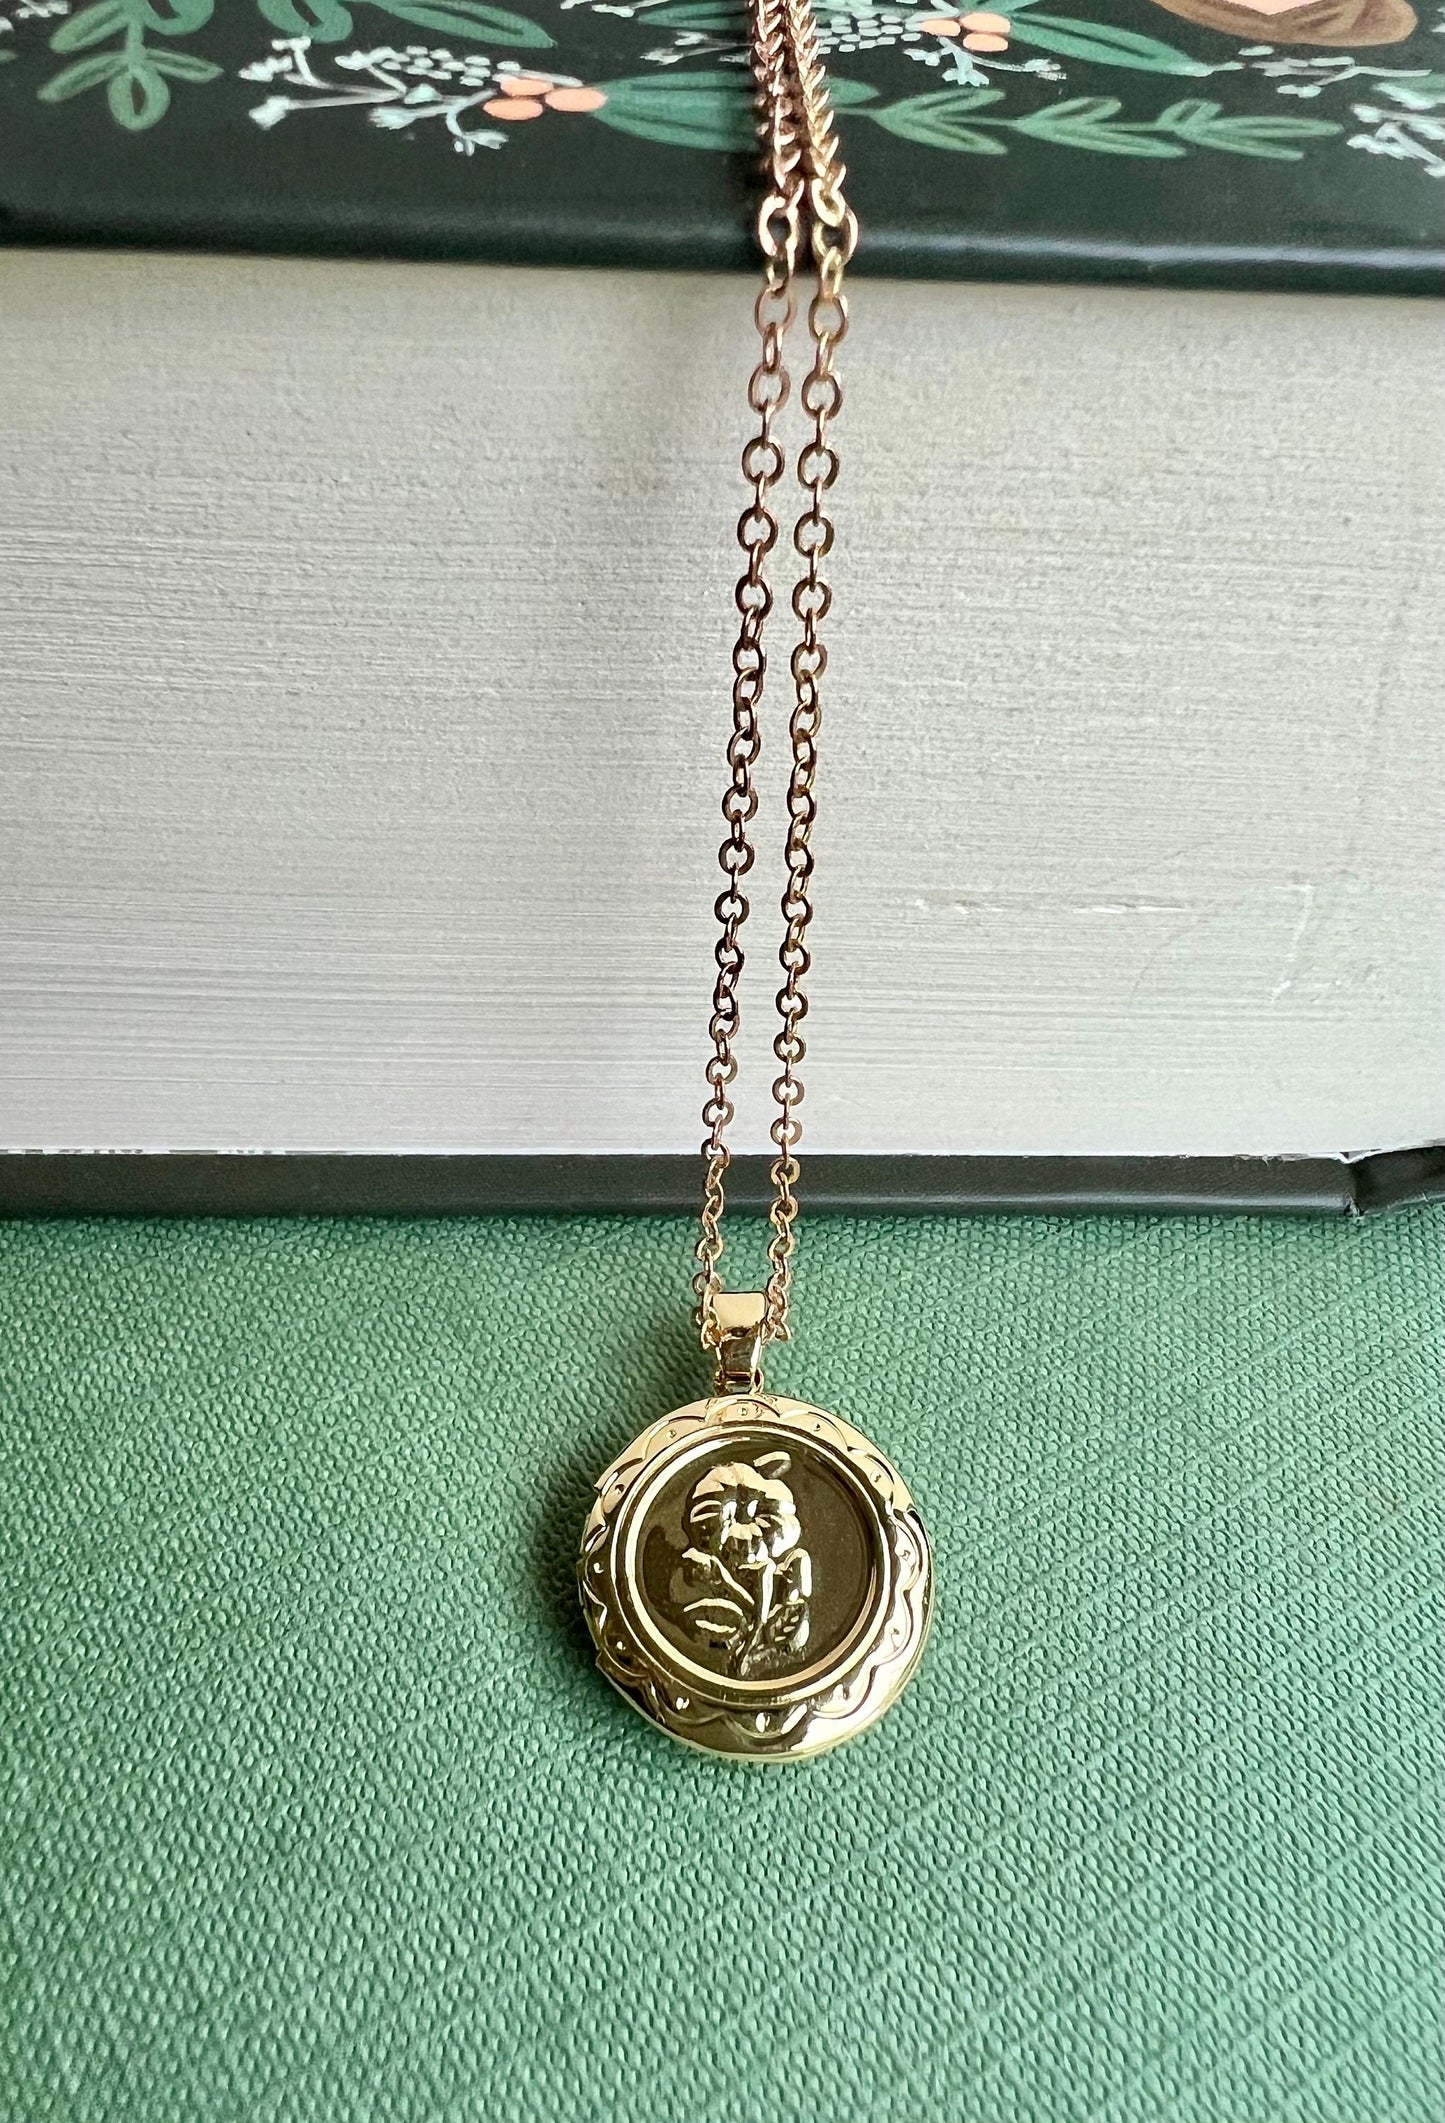 Antique style locket, 18k gold locket, flower necklace, small locket necklace, dainty locket, vintage locket, Christmas gift for her